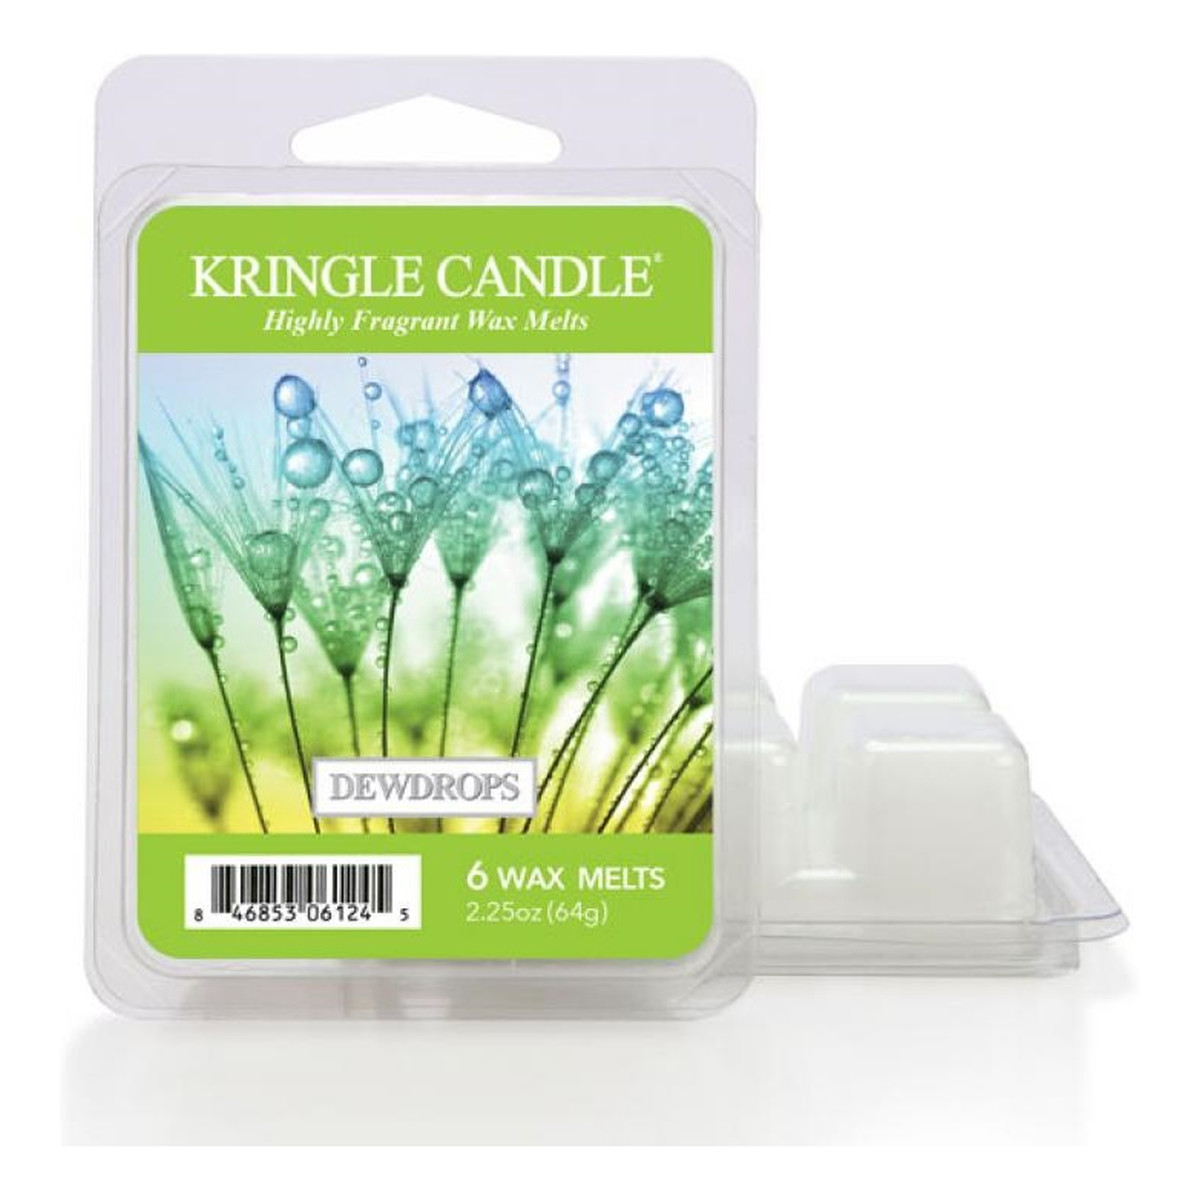 Kringle Candle Wax wosk zapachowy "potpourri" dewdrops 64g